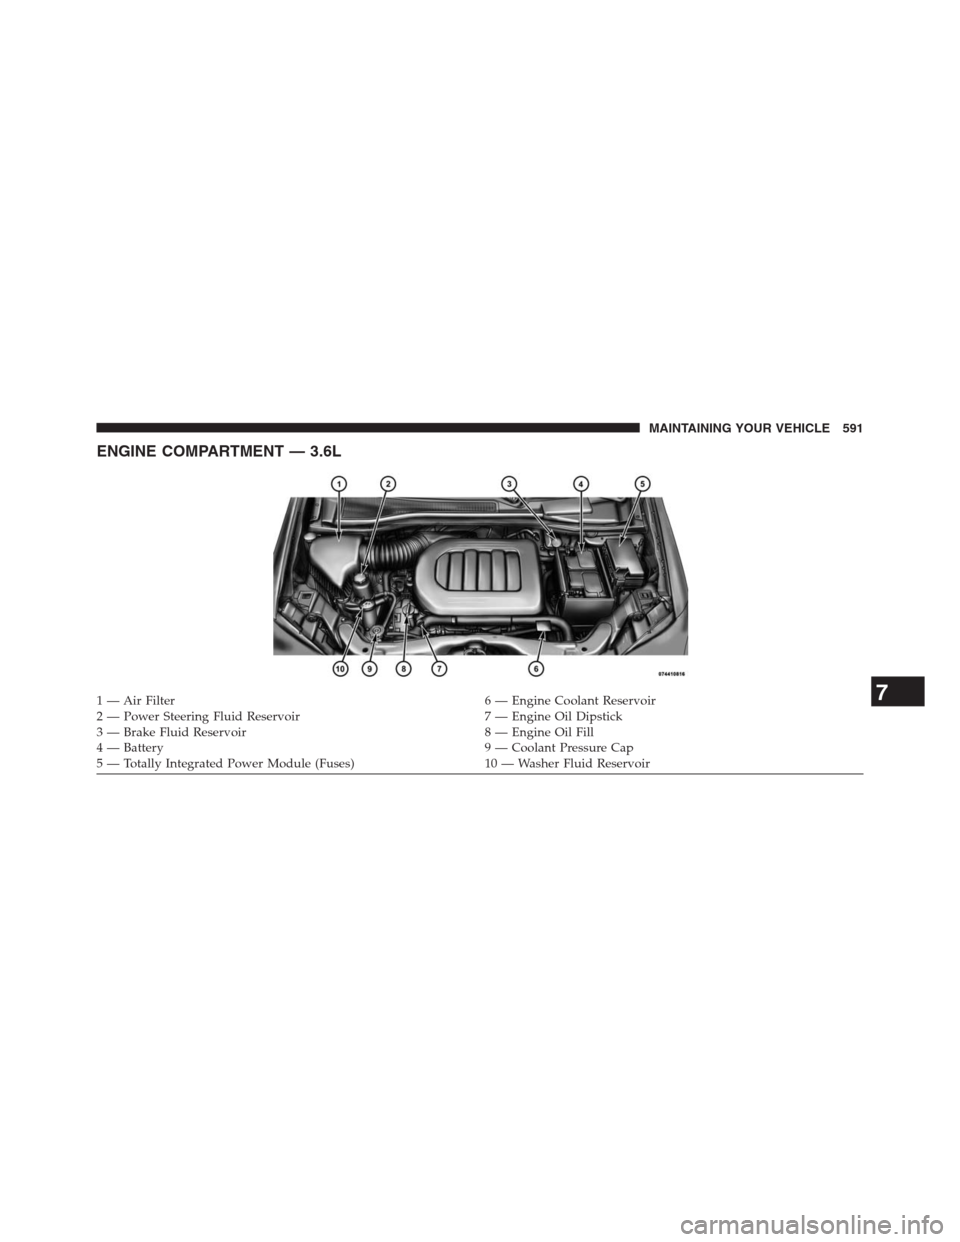 DODGE GRAND CARAVAN 2013 5.G Owners Manual ENGINE COMPARTMENT — 3.6L
1 — Air Filter 6 — Engine Coolant Reservoir
2 — Power Steering Fluid Reservoir 7 — Engine Oil Dipstick
3 — Brake Fluid Reservoir 8 — Engine Oil Fill
4 — Batte